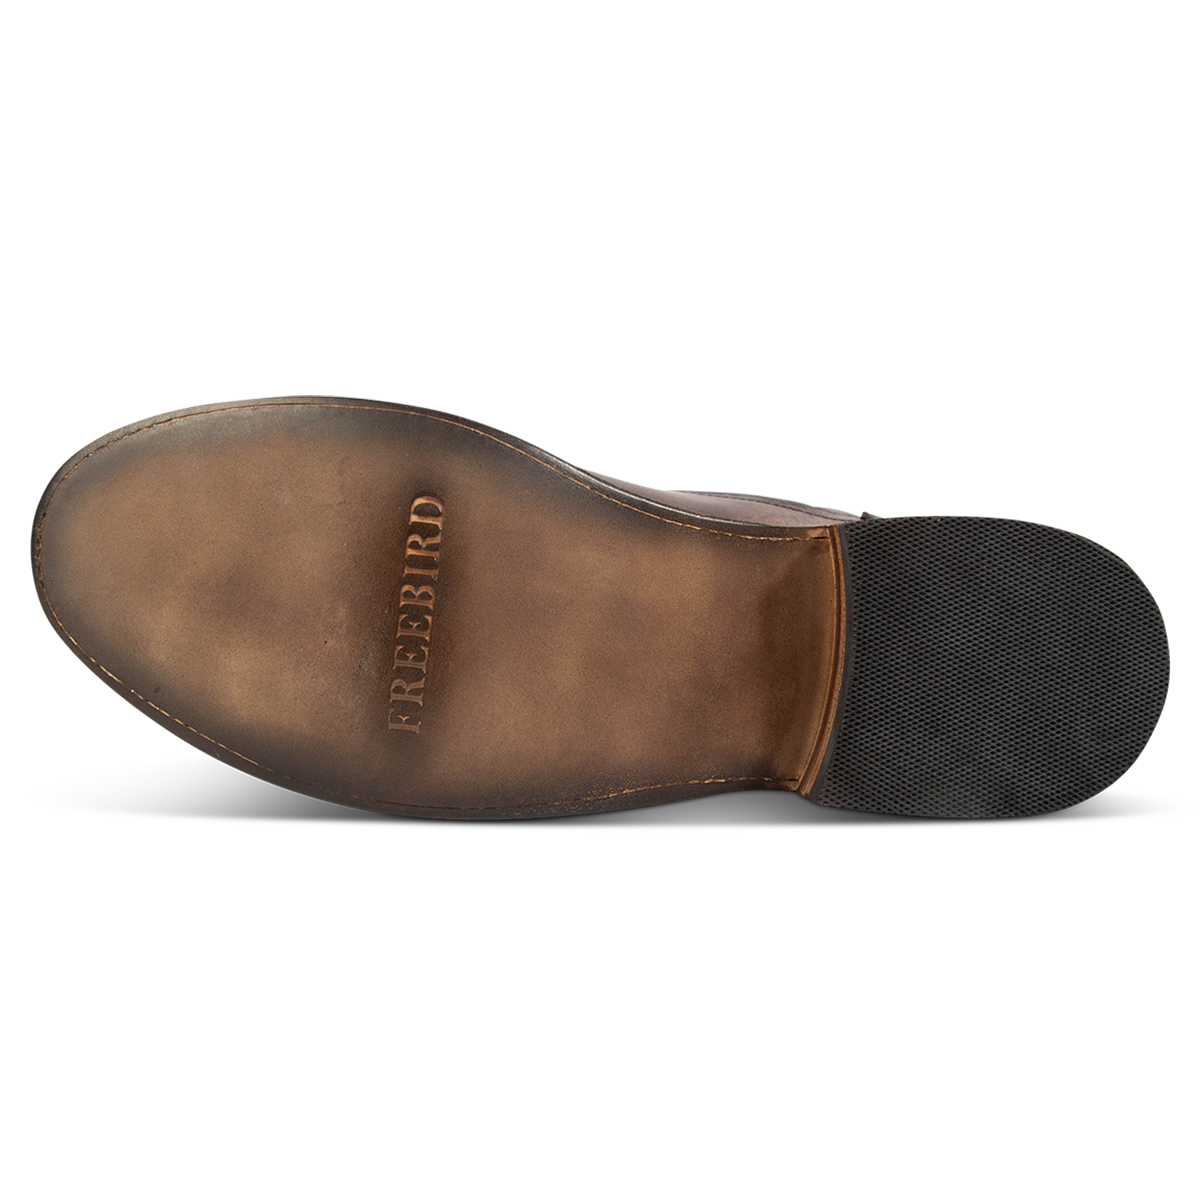 Leather imprinted sole FREEBIRD on men's Brooks black leather boot